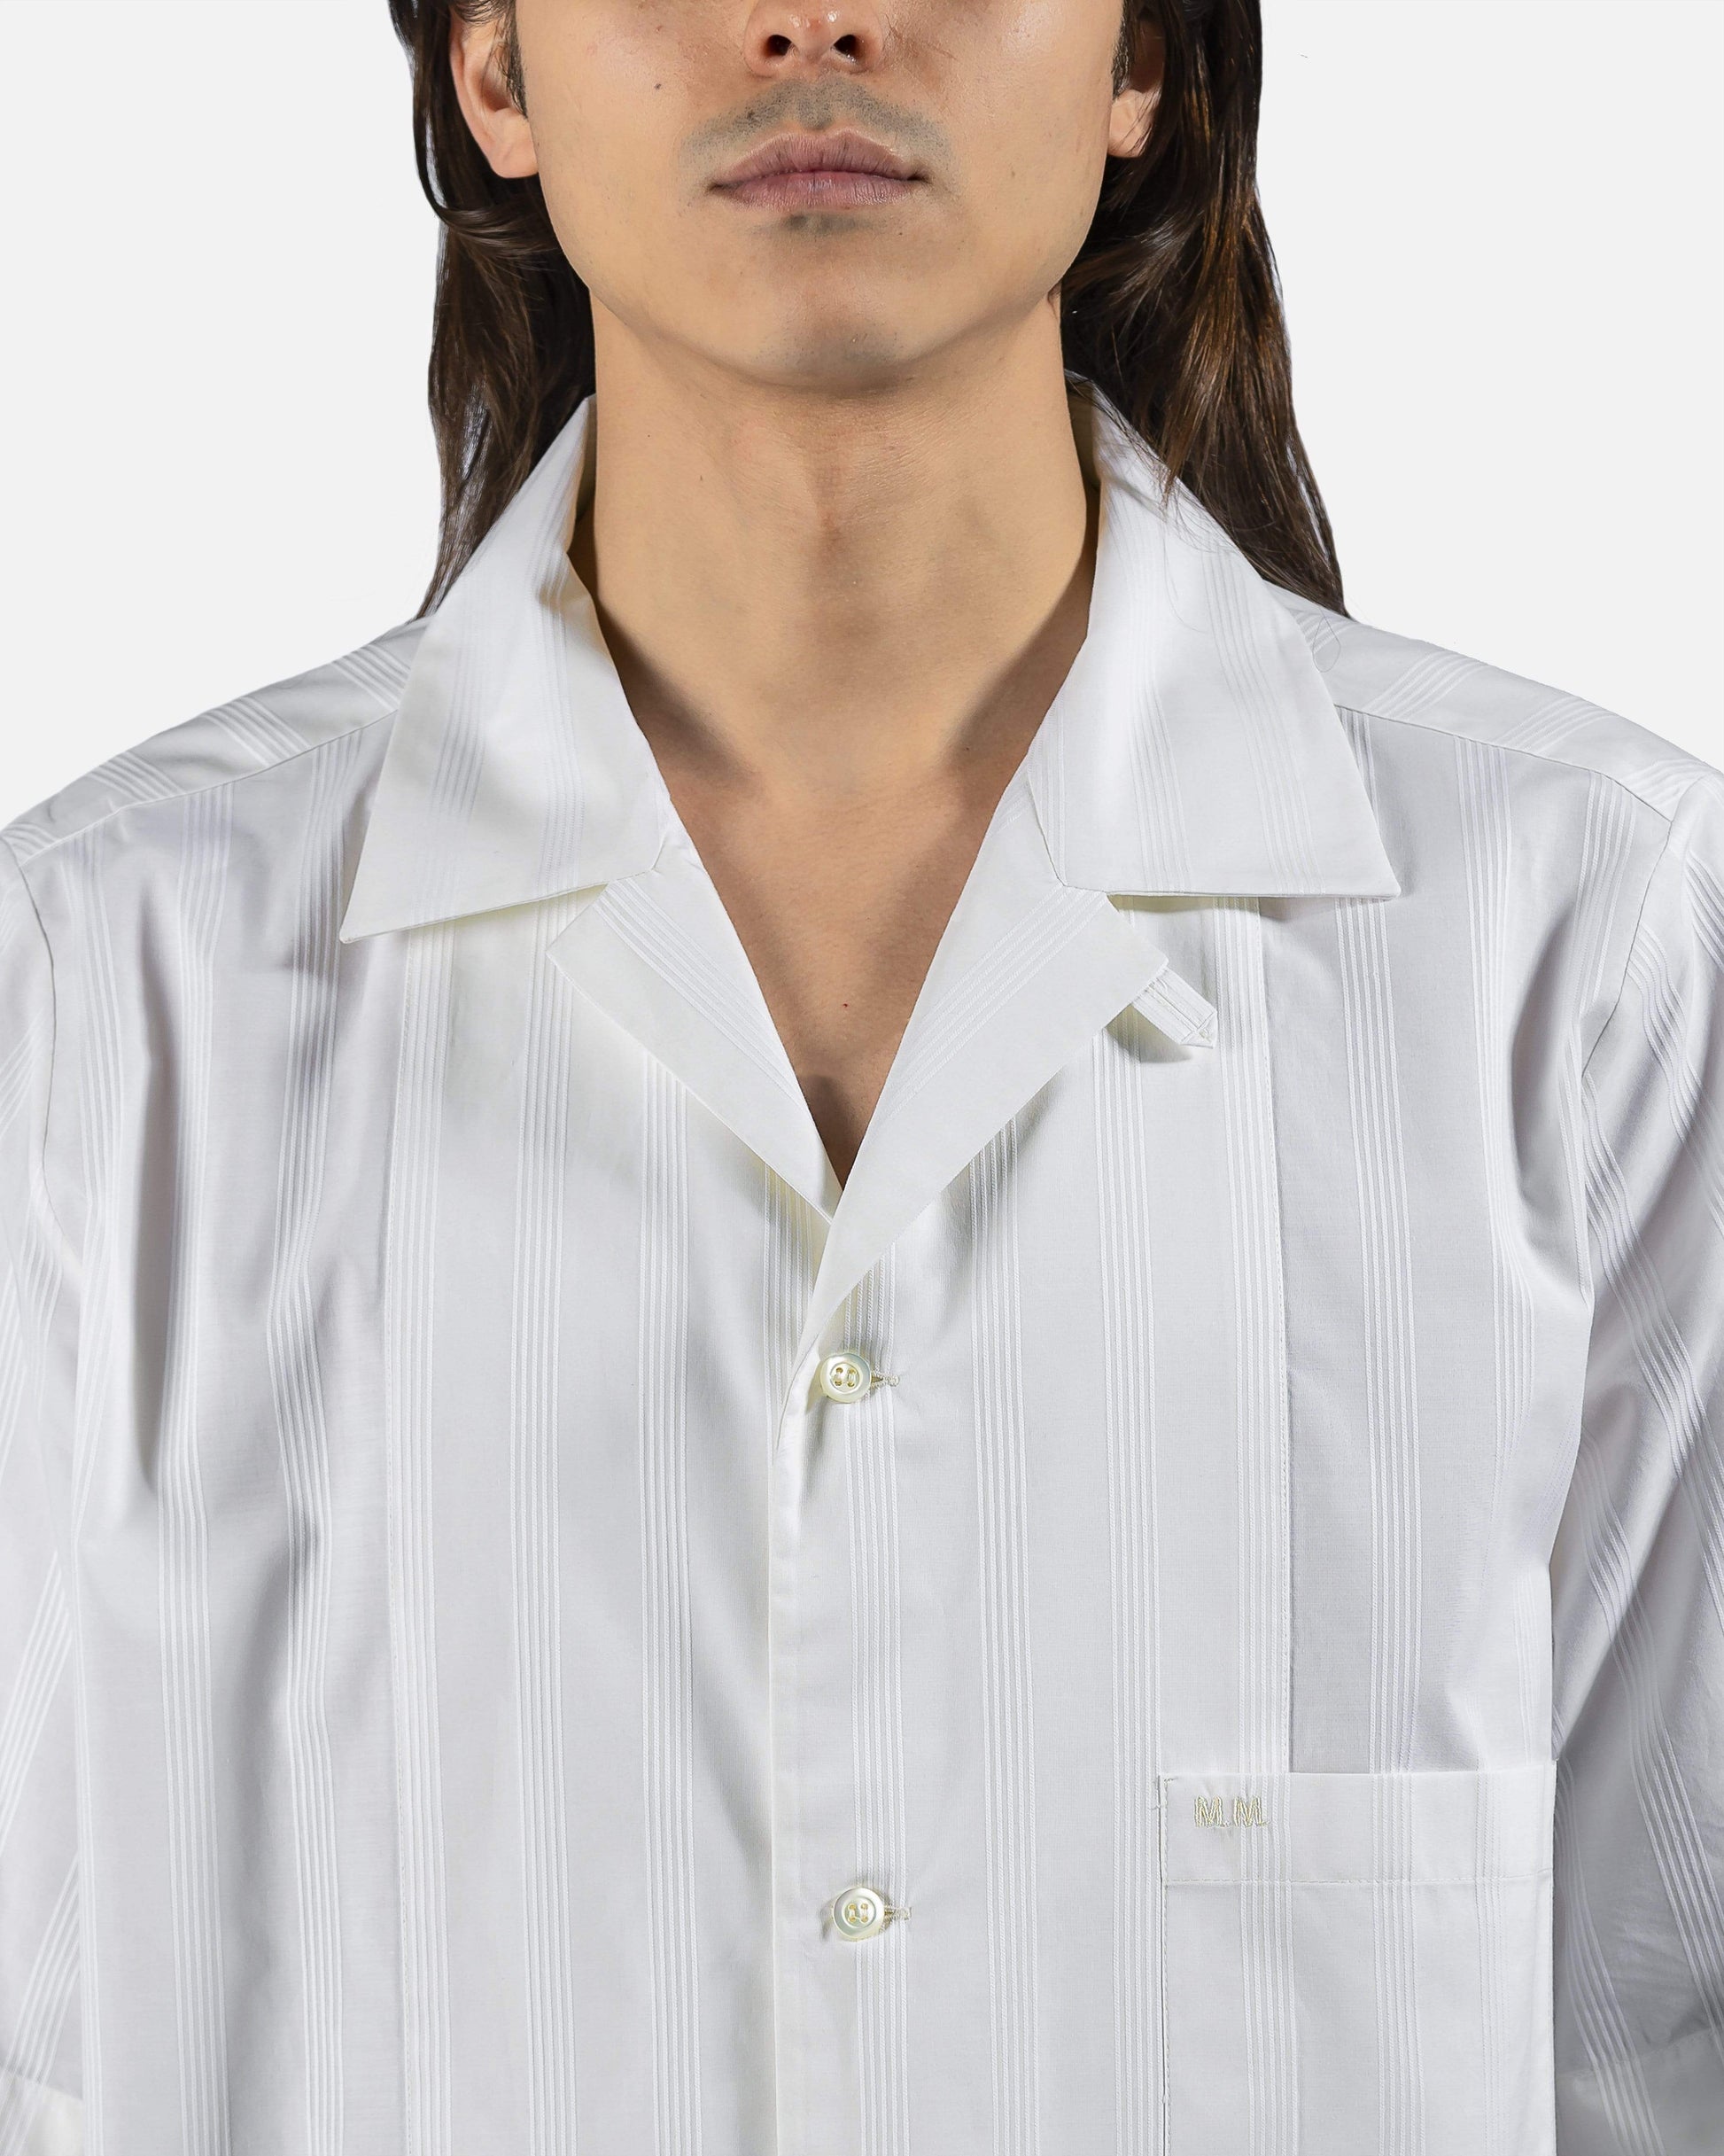 Maison Margiela Men's Shirts Cotton Striped Shirt in Off-White